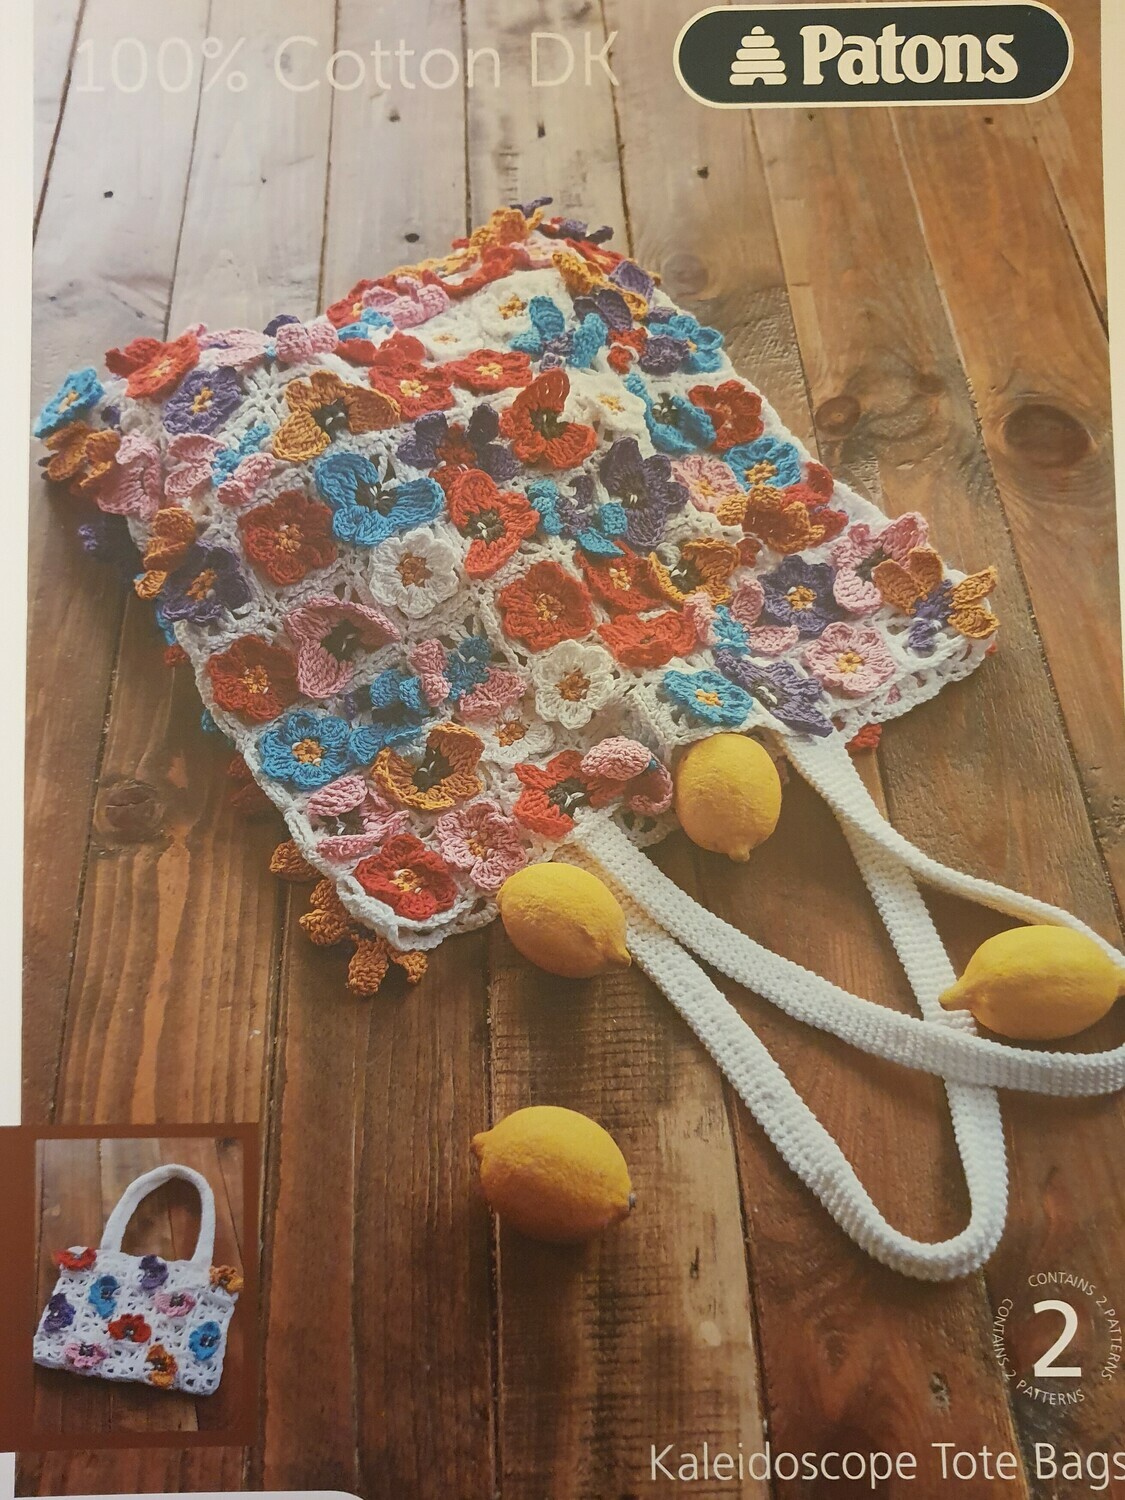 Kaleidoscope Tote Bags Crochet Pattern by Patons